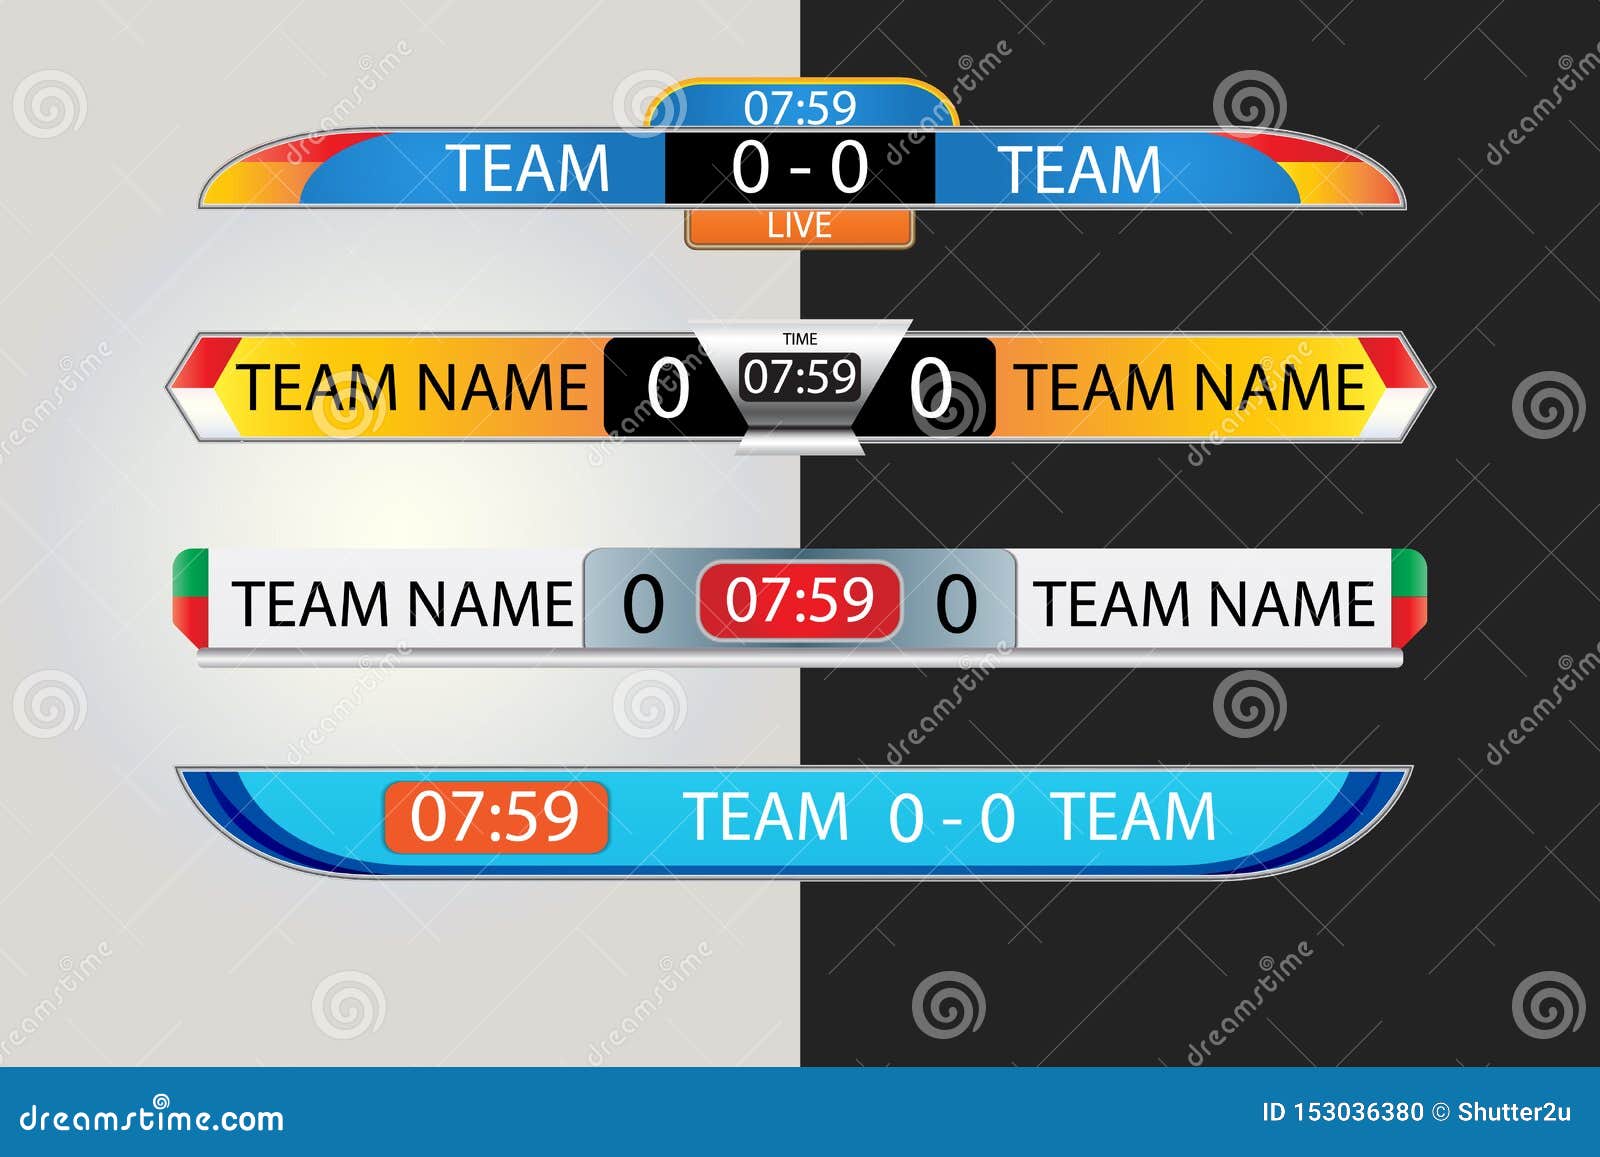 Live Scoreboard Digital Screen Graphic Template For Broadcasting Of Soccer Football Or Futsal Illustration Vector Design Stock Vector Illustration Of Game Broadcast 153036380